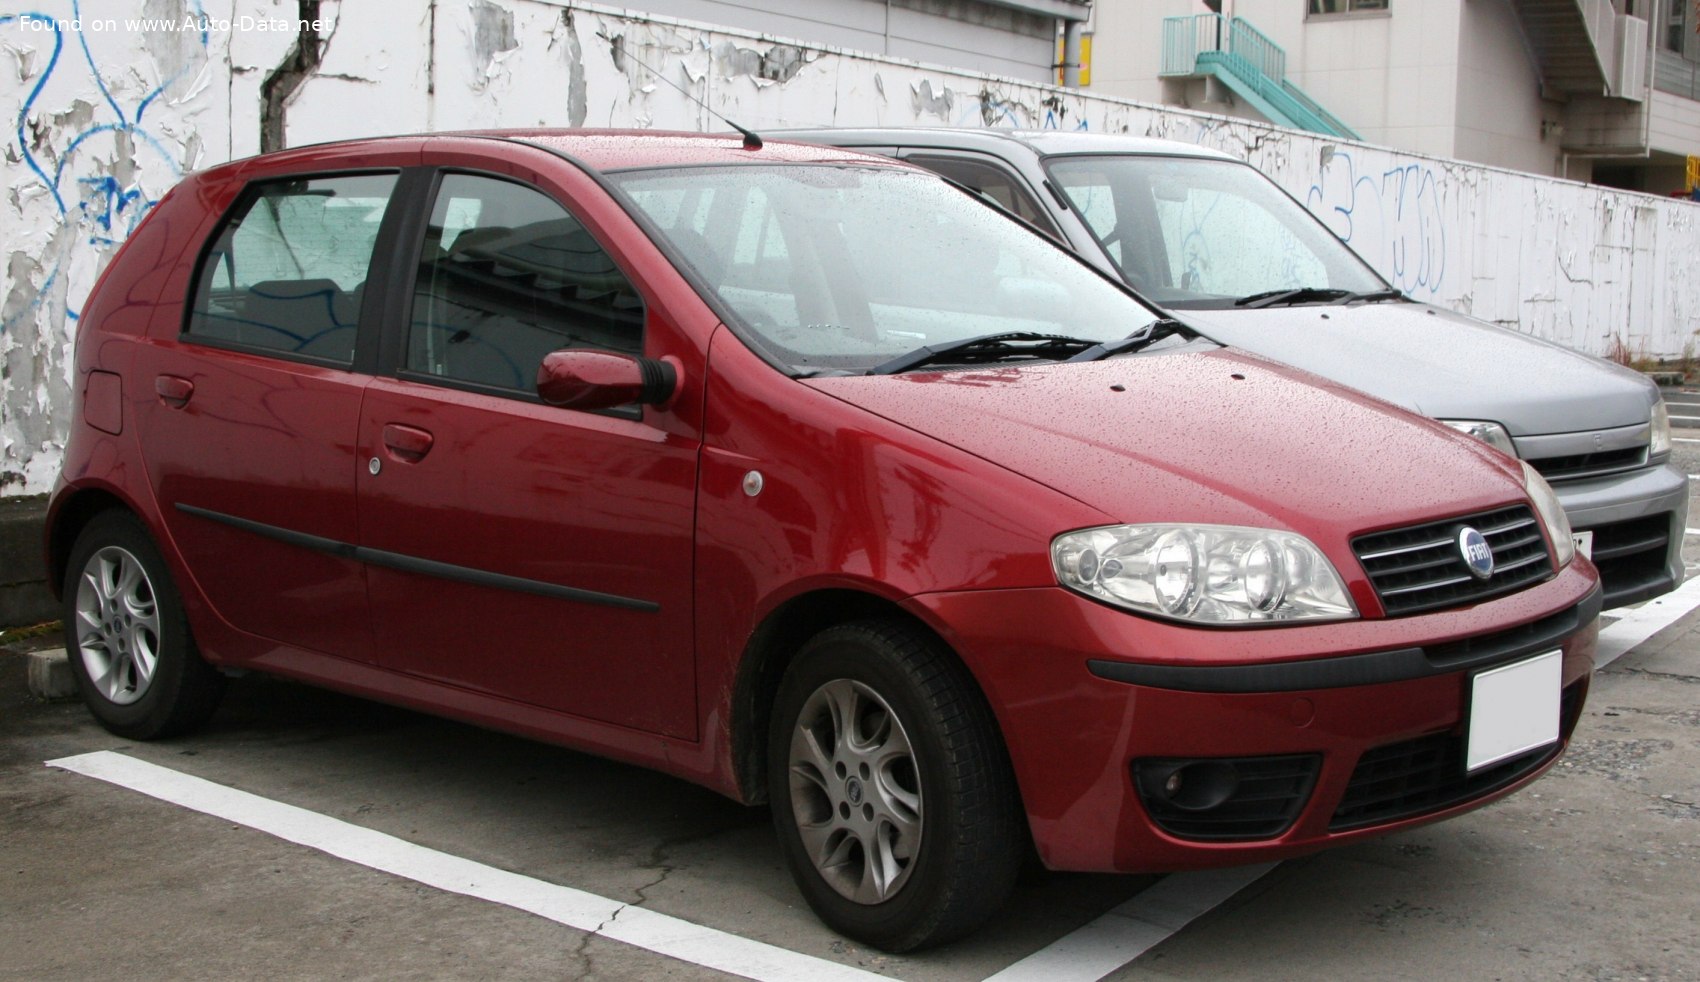 2003 Fiat Punto II (188, facelift 2003) 3dr 1.2 (80 Hp) CVT